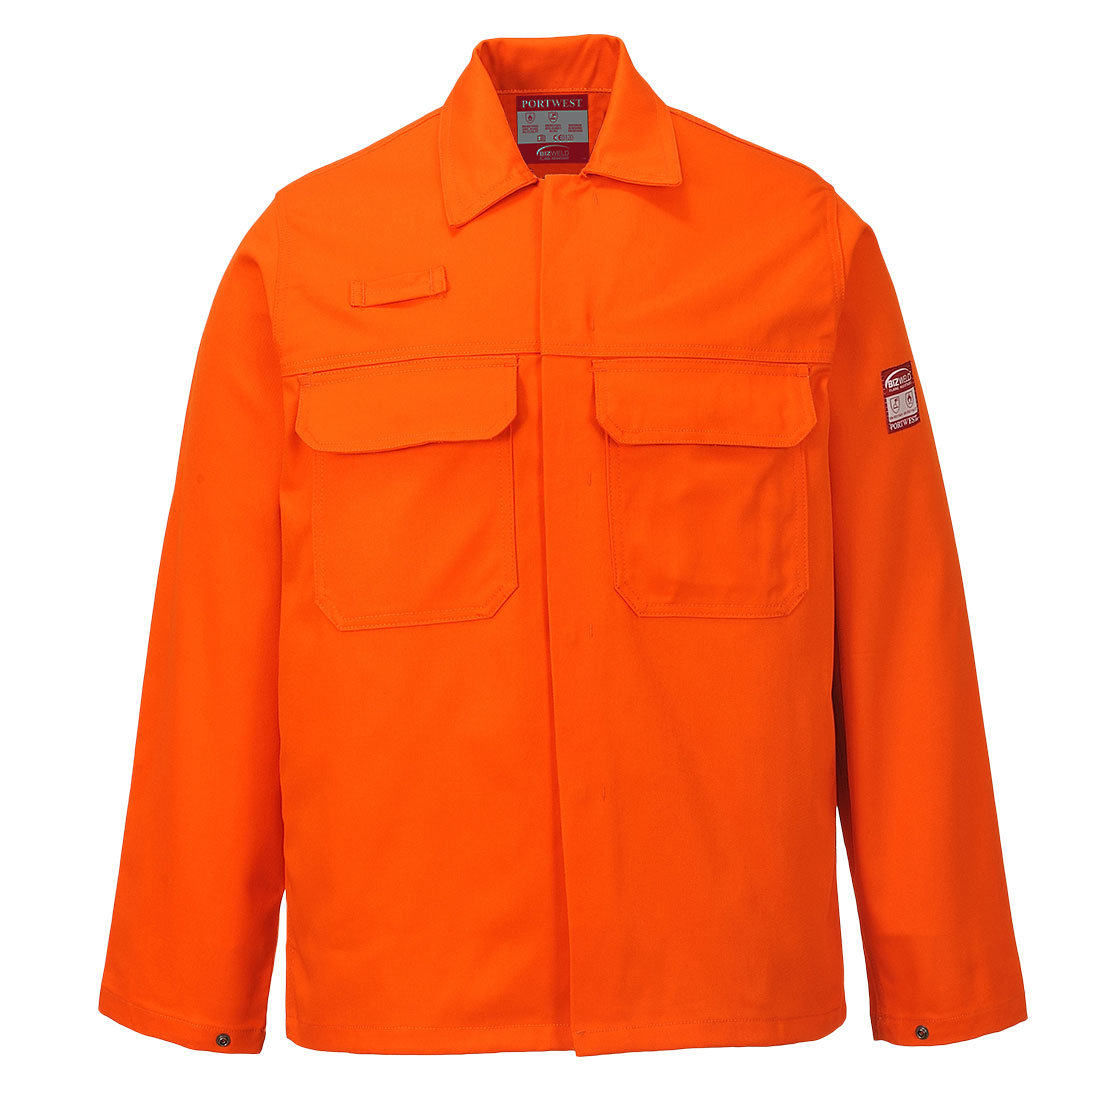 Bizweld Jacket - Orange